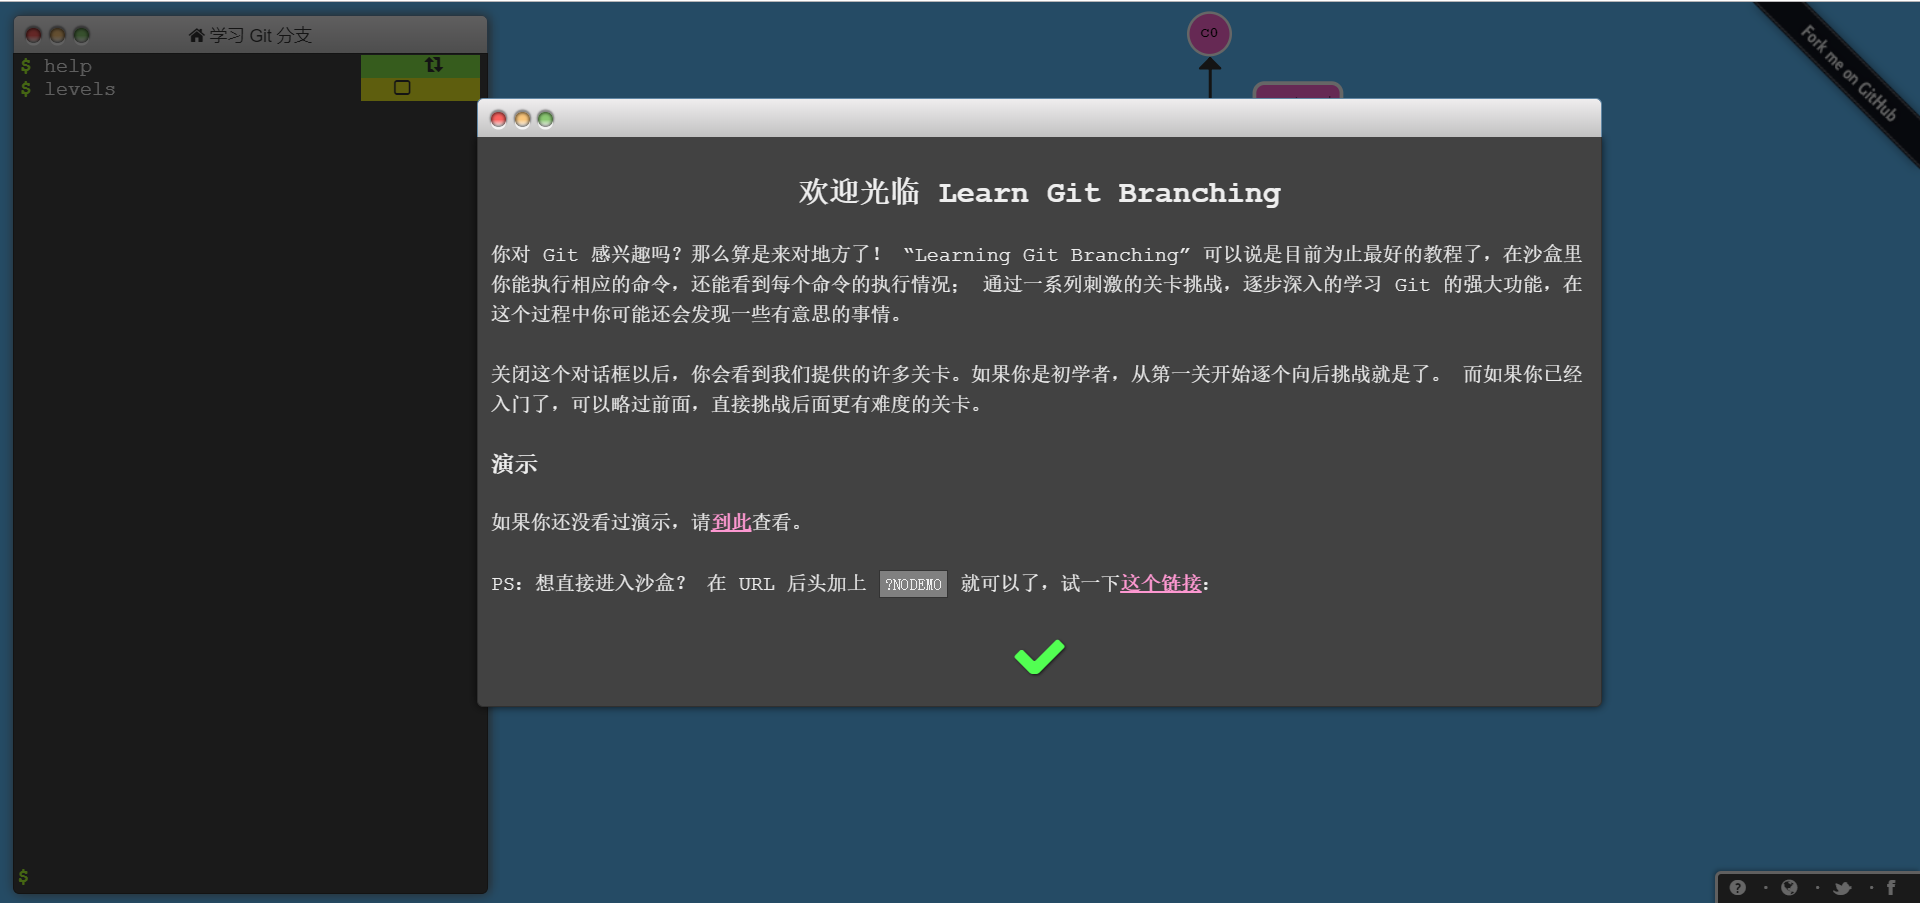 #Learn Git Branching#推荐一个可视化Git教程-夏末浅笑